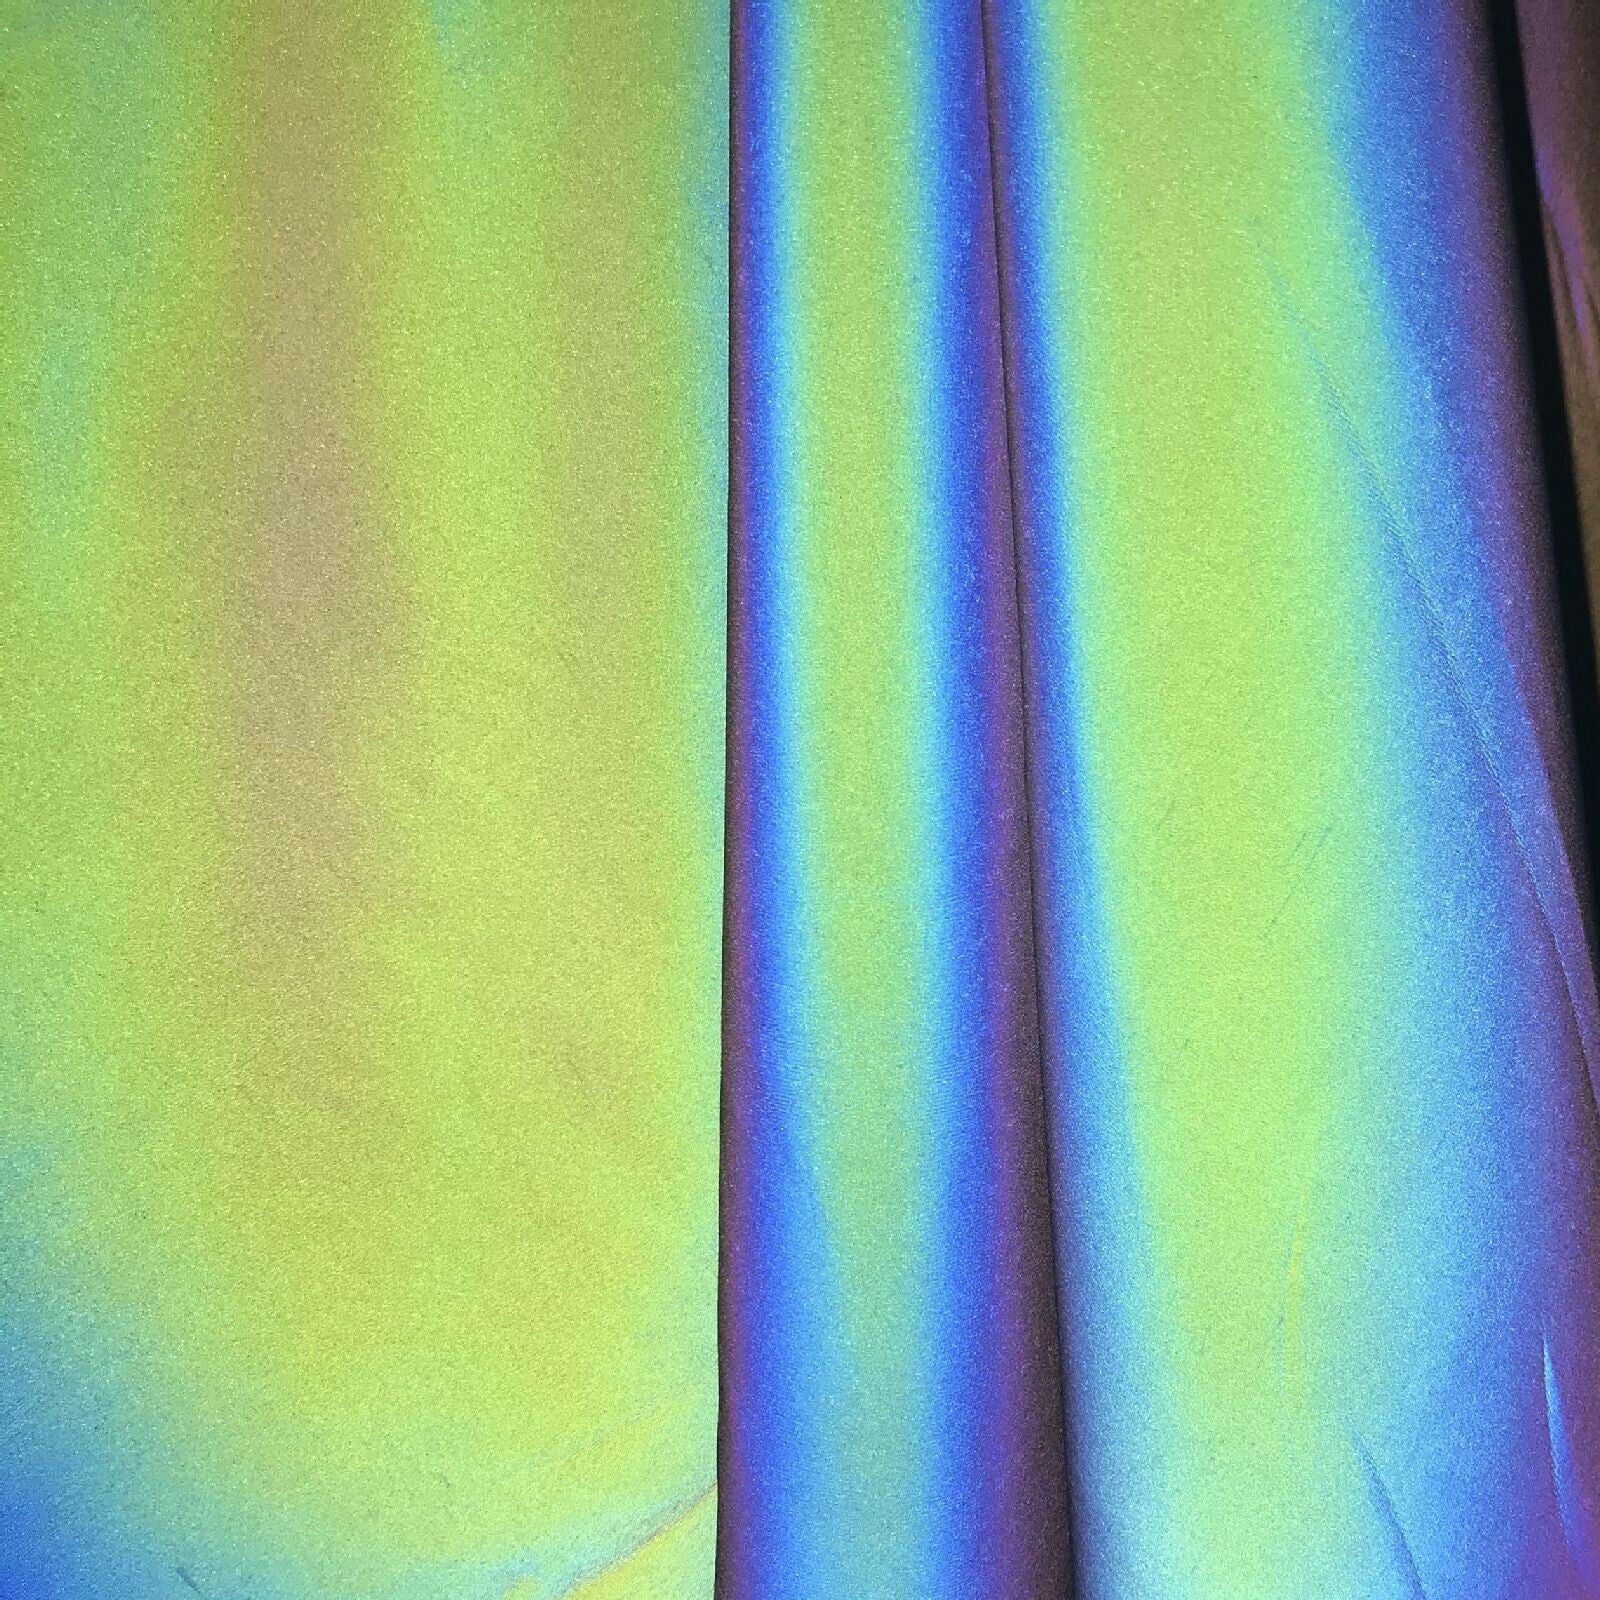 Iridescence Reflective Fabric Iridescent Mirrored Holographic Magic Cloth Craft